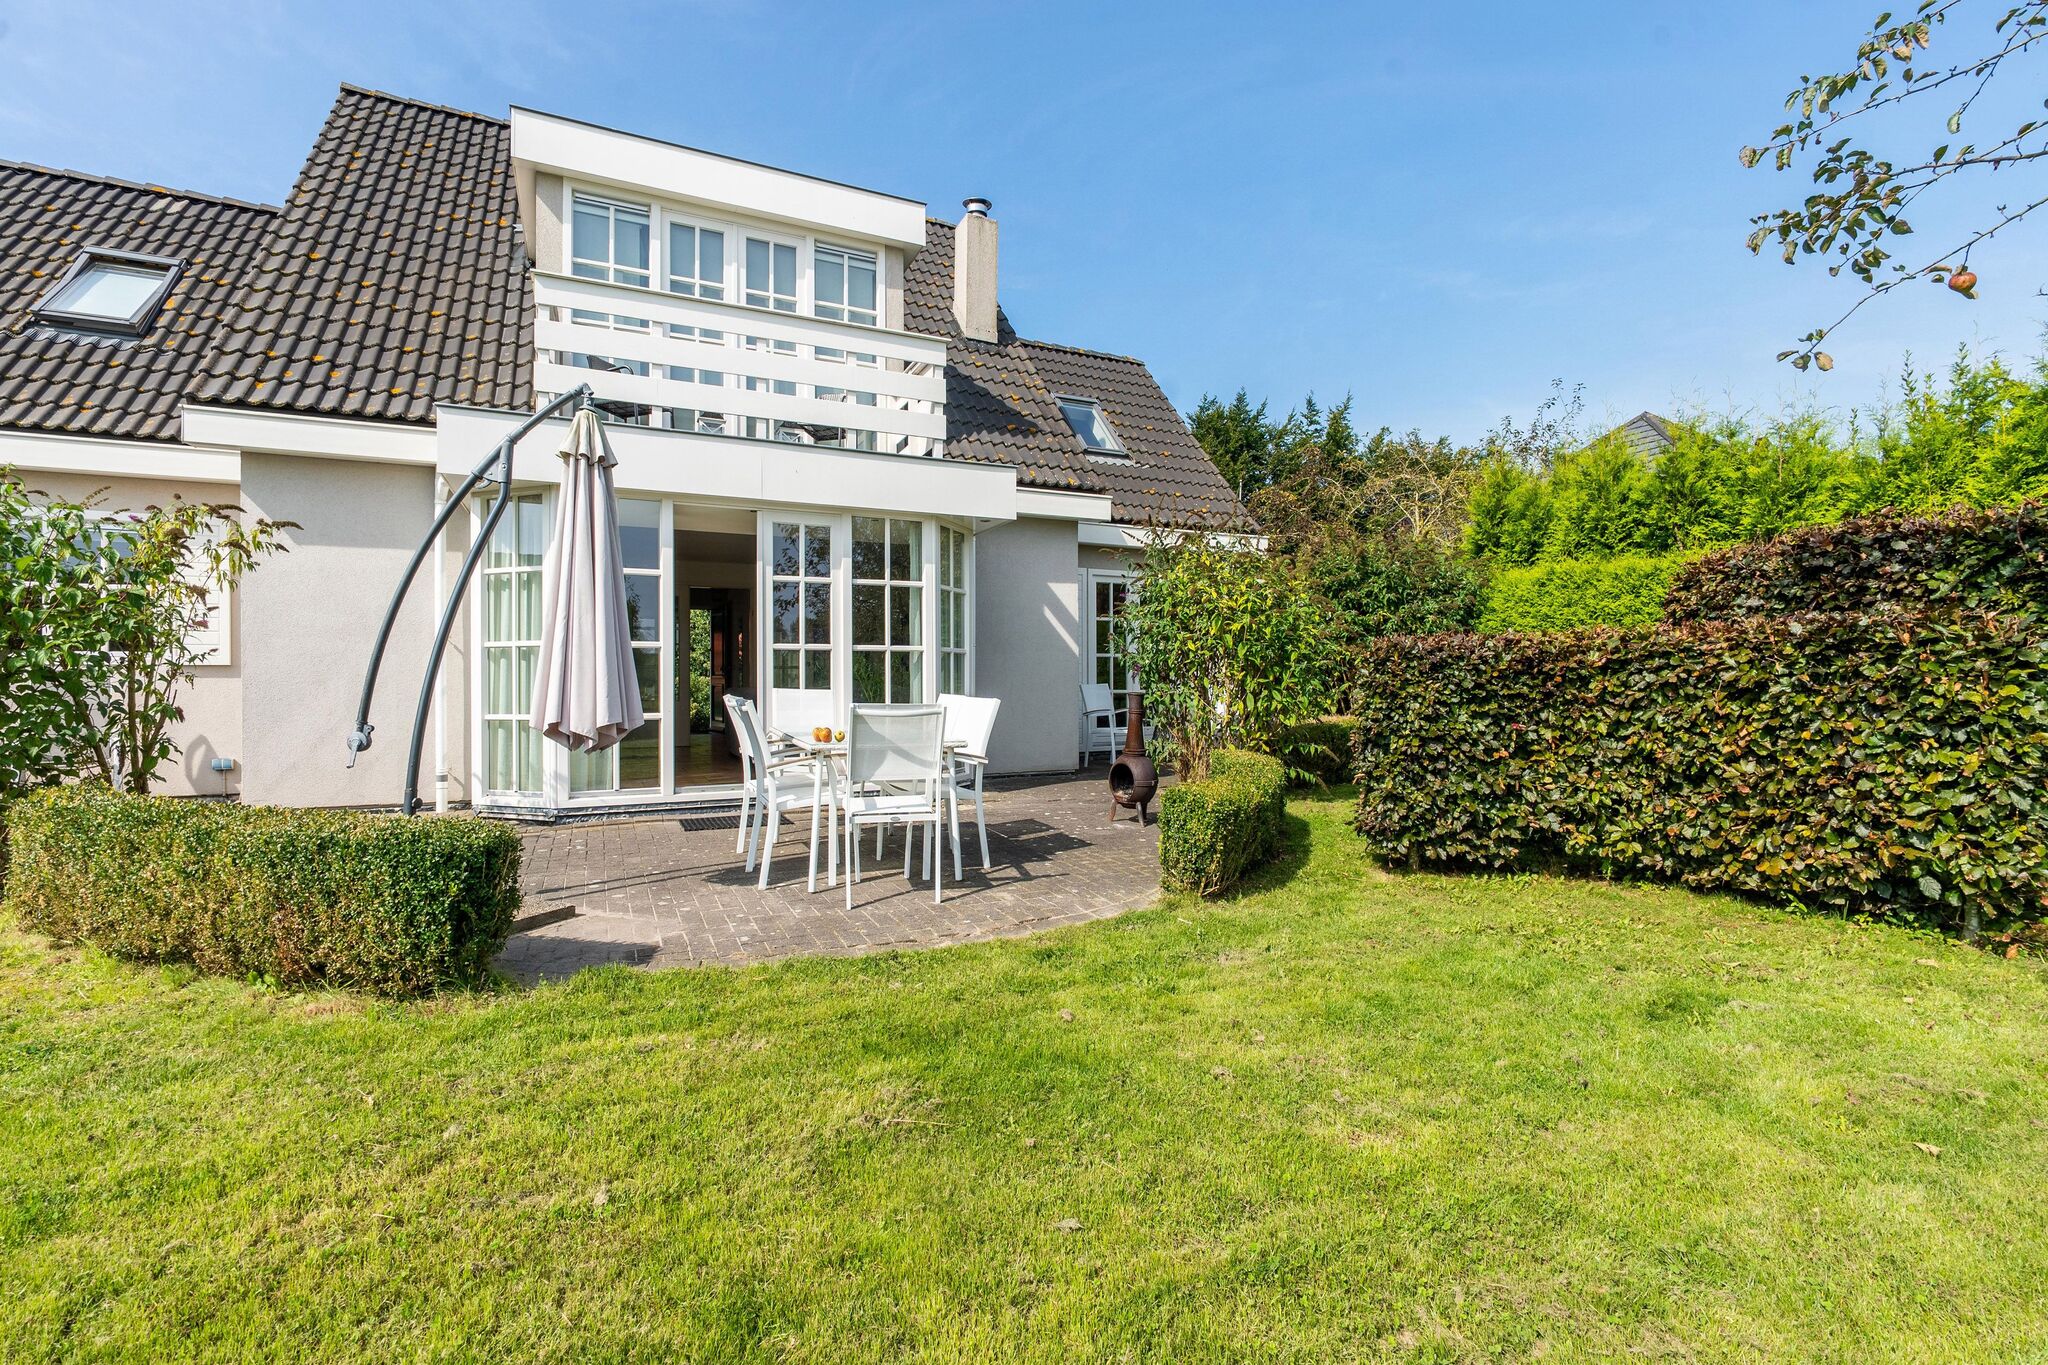 Exclusive villa in Zeewolde with a terrace